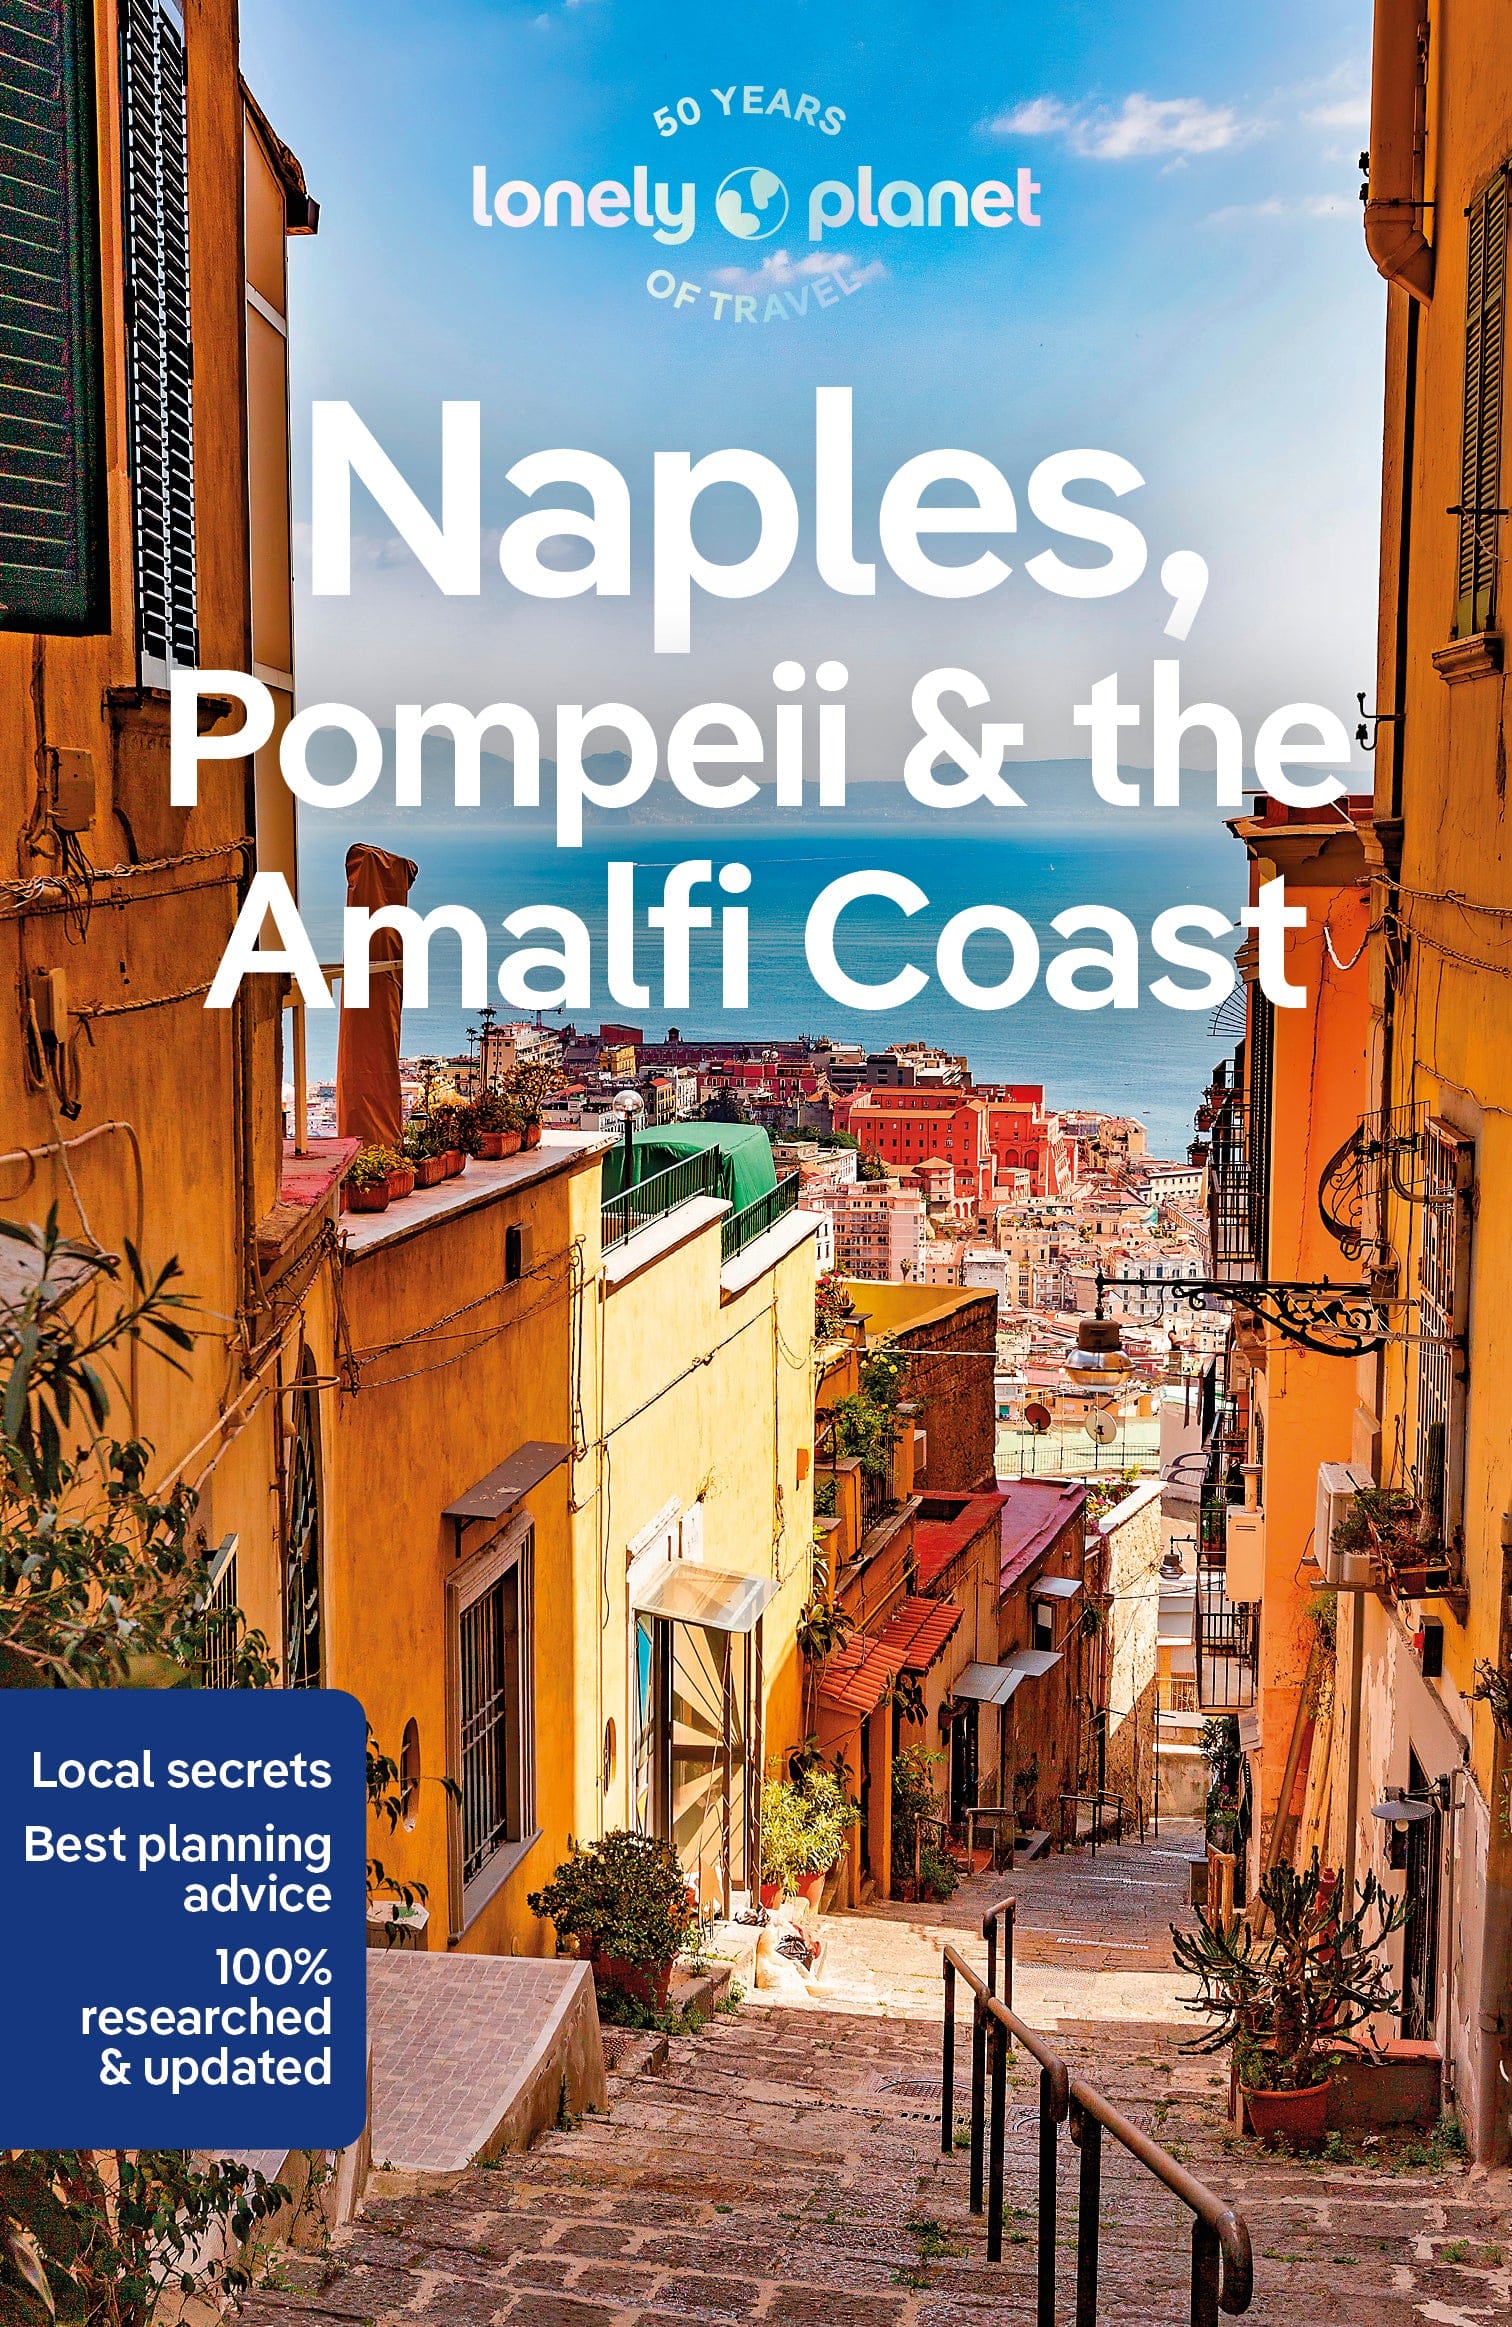 Ebook　Coast　Amalfi　the　and　Naples,　Book　Pompeii　Travel